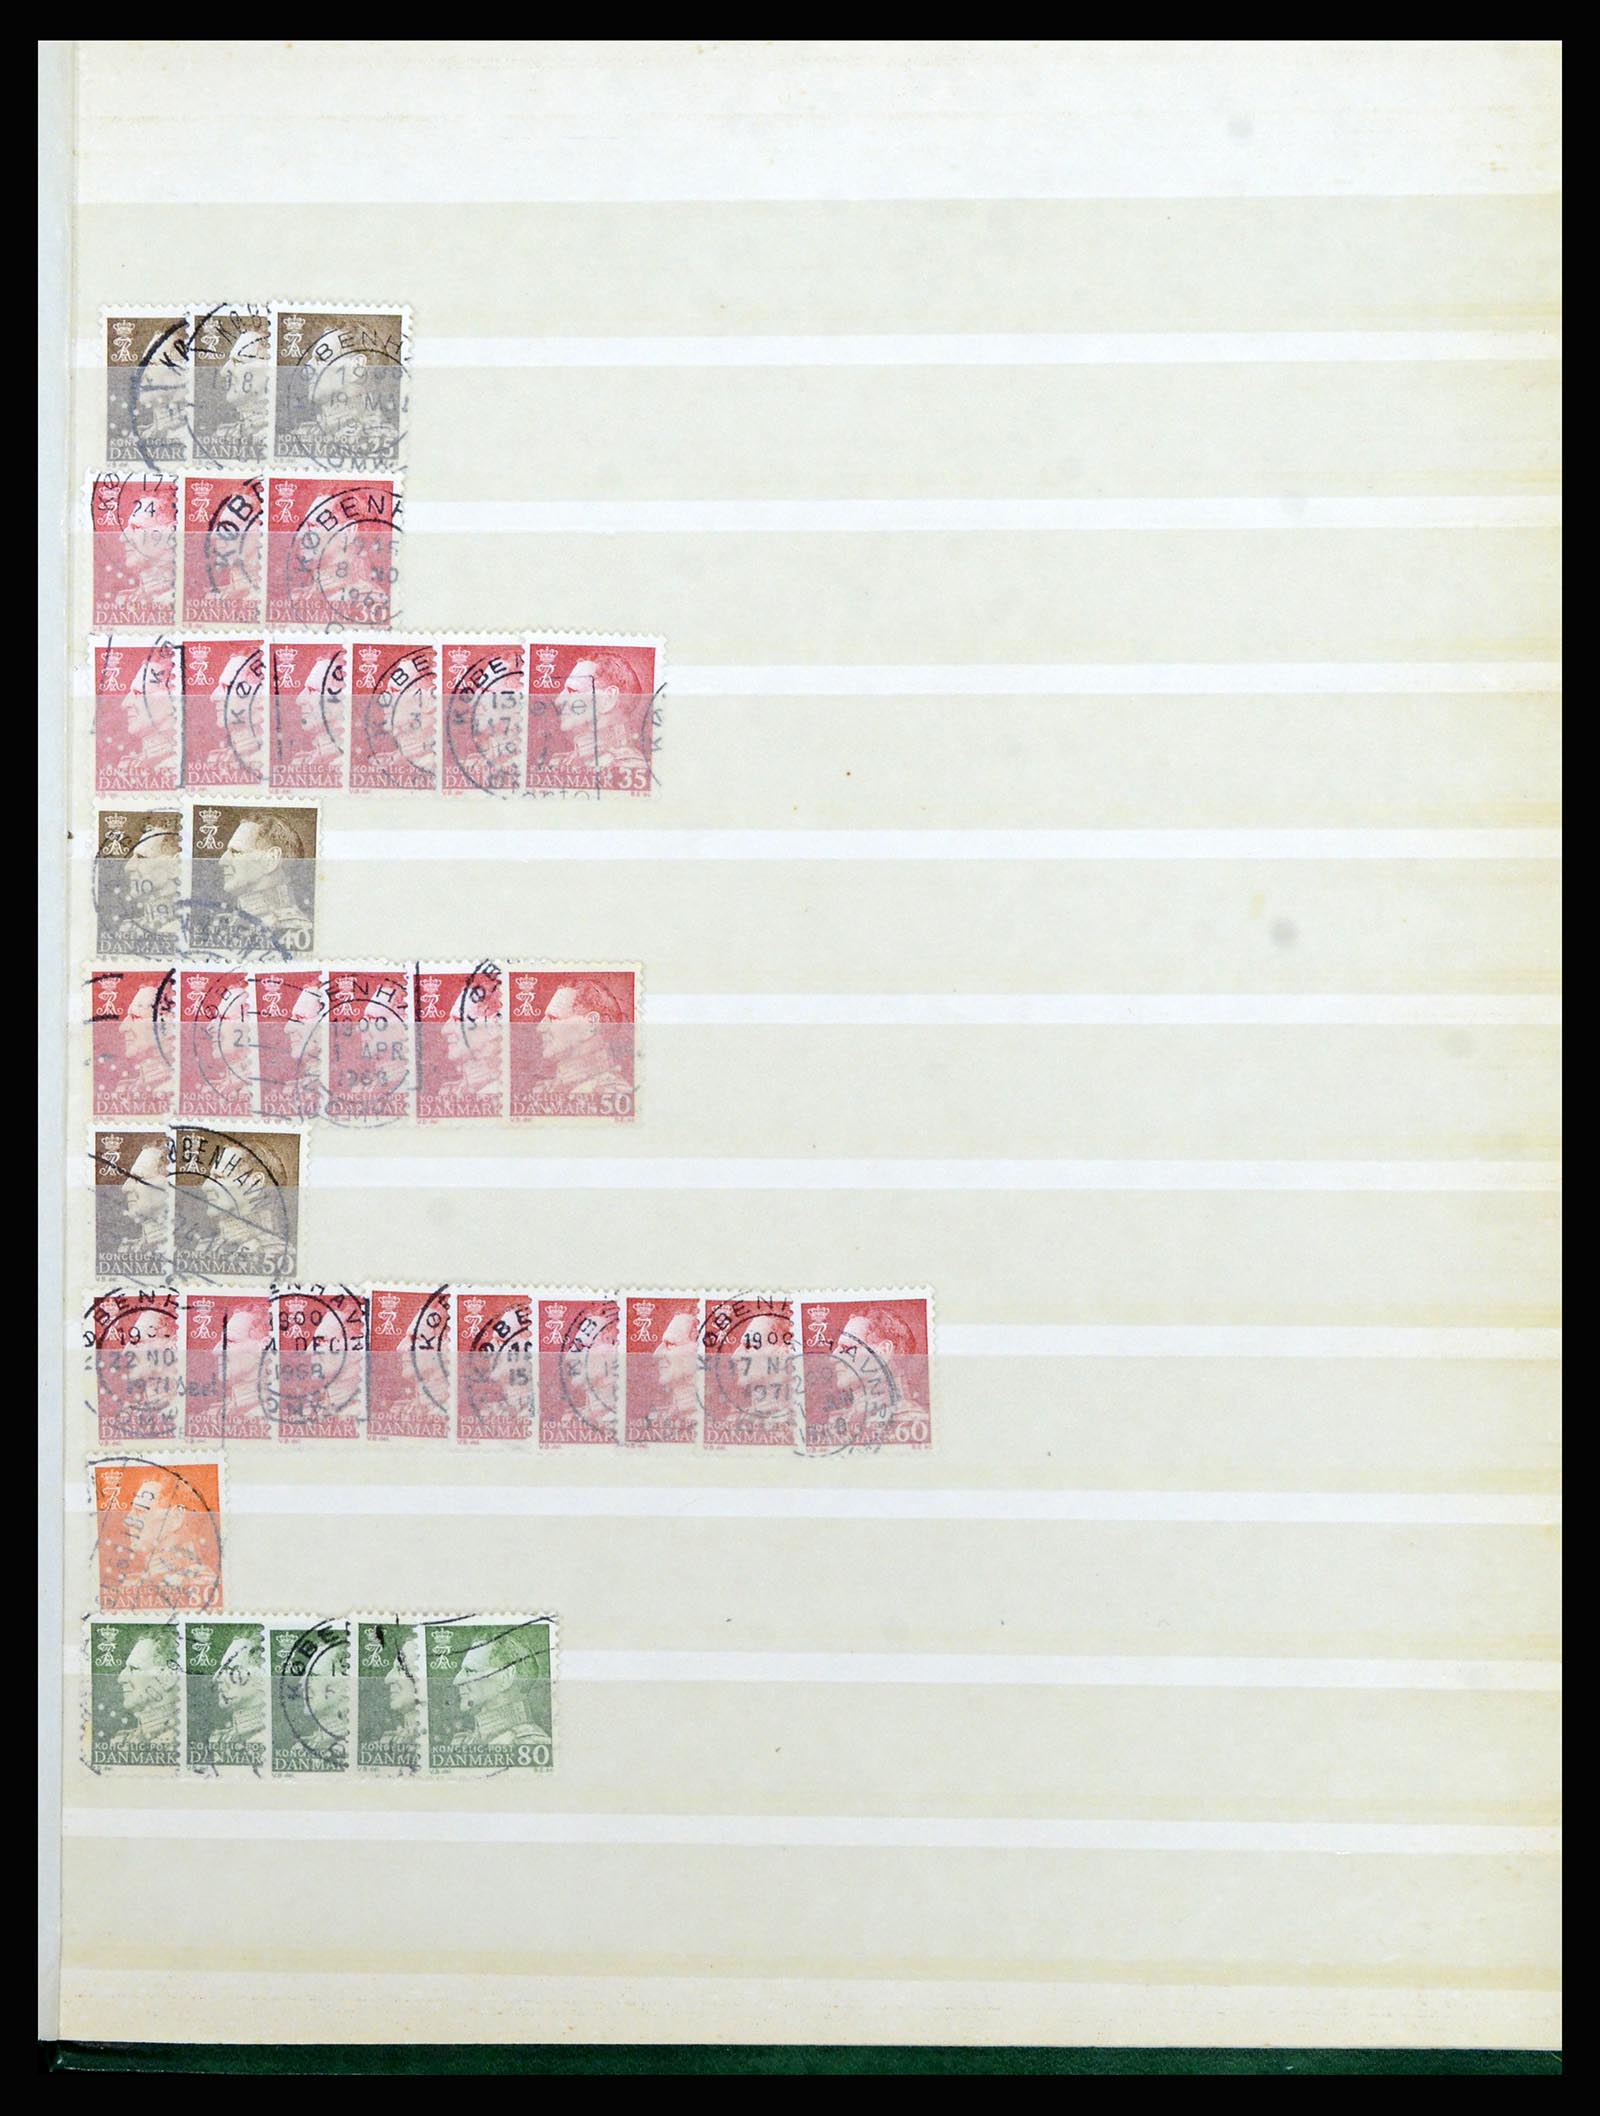 37056 095 - Stamp collection 37056 Denmark perfins.